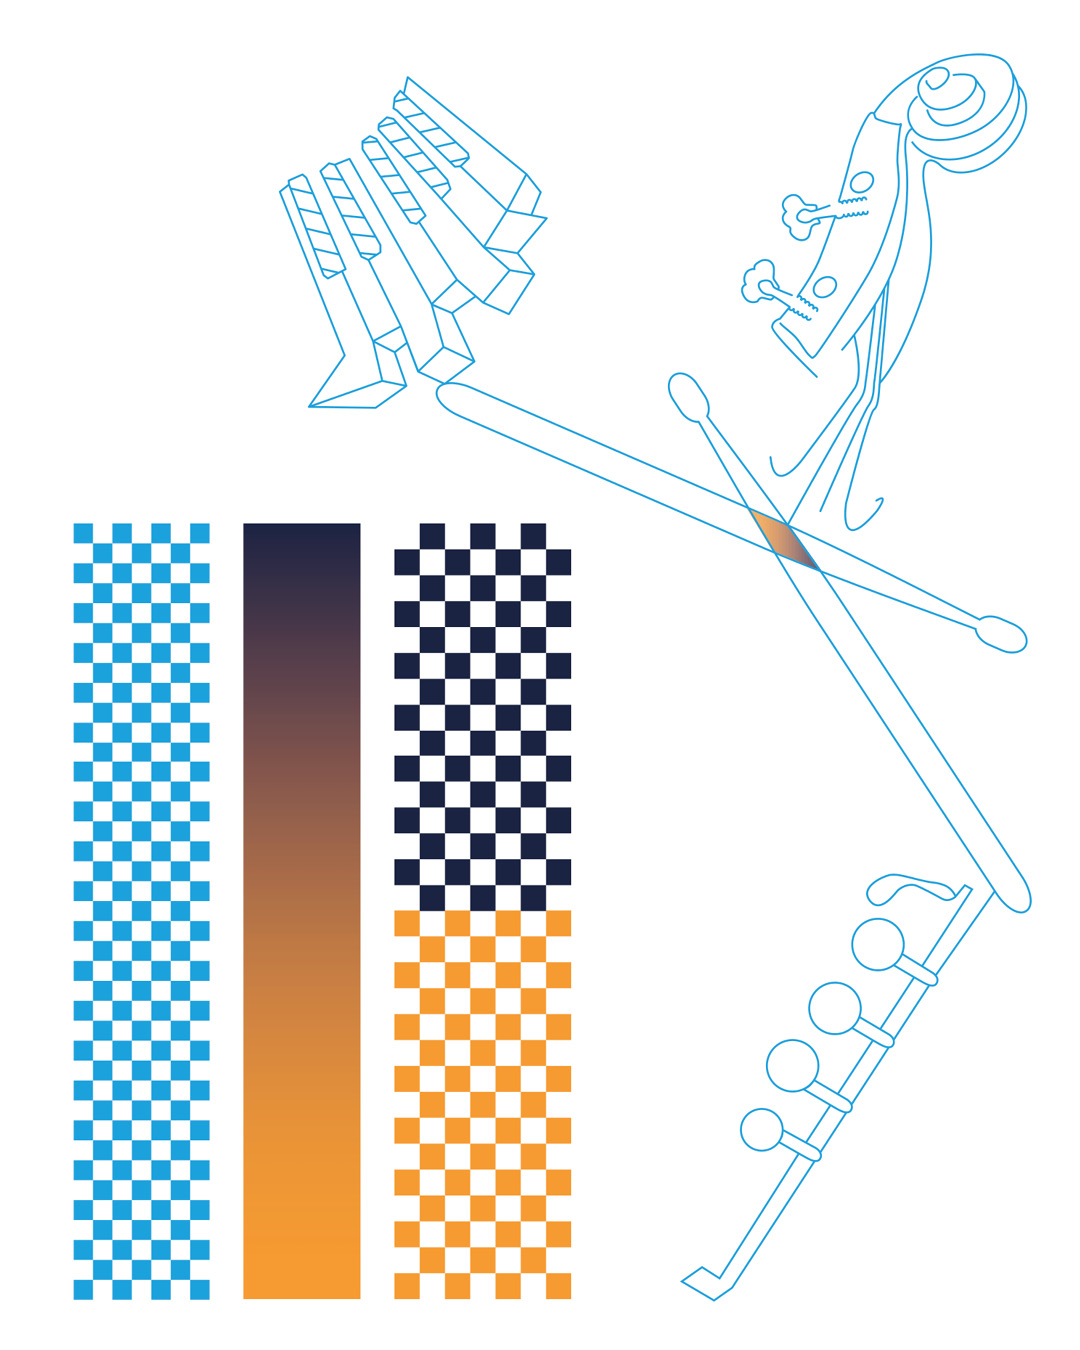 Amostras de cores utilizadas (ciano, dourado e azul-escuro) e abstrações de piano, flauta transversal, baquetas de bateria e contrabaixo acústico (os instrumentos da Marimbanda)